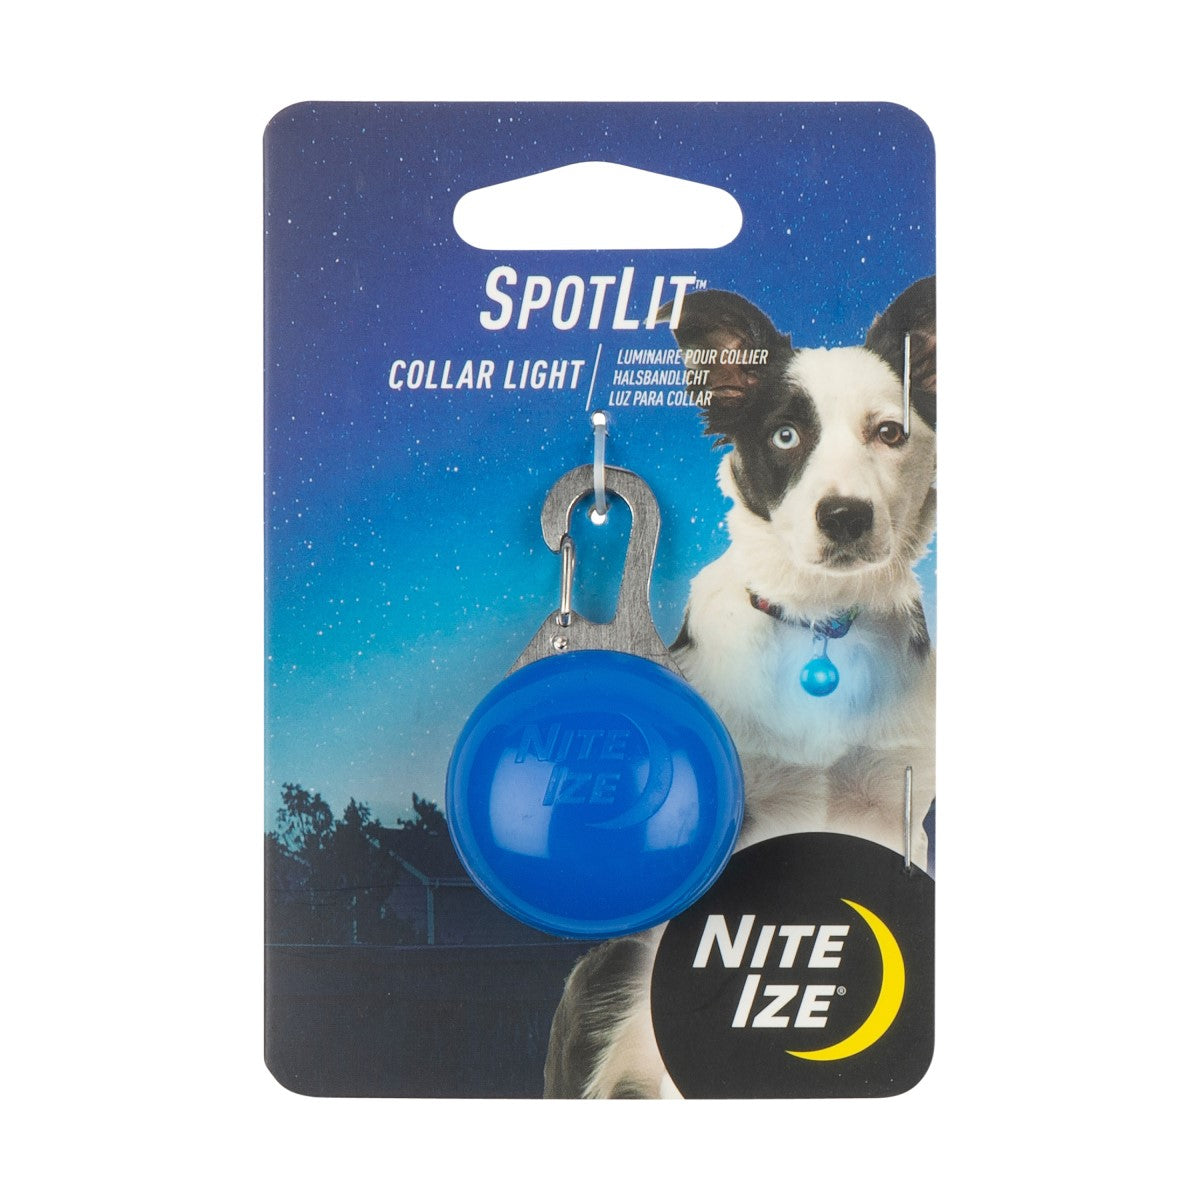 Nite Ize SpotLit Collar Light Plastic Lime / Blue/ Orange/ Pink/ White